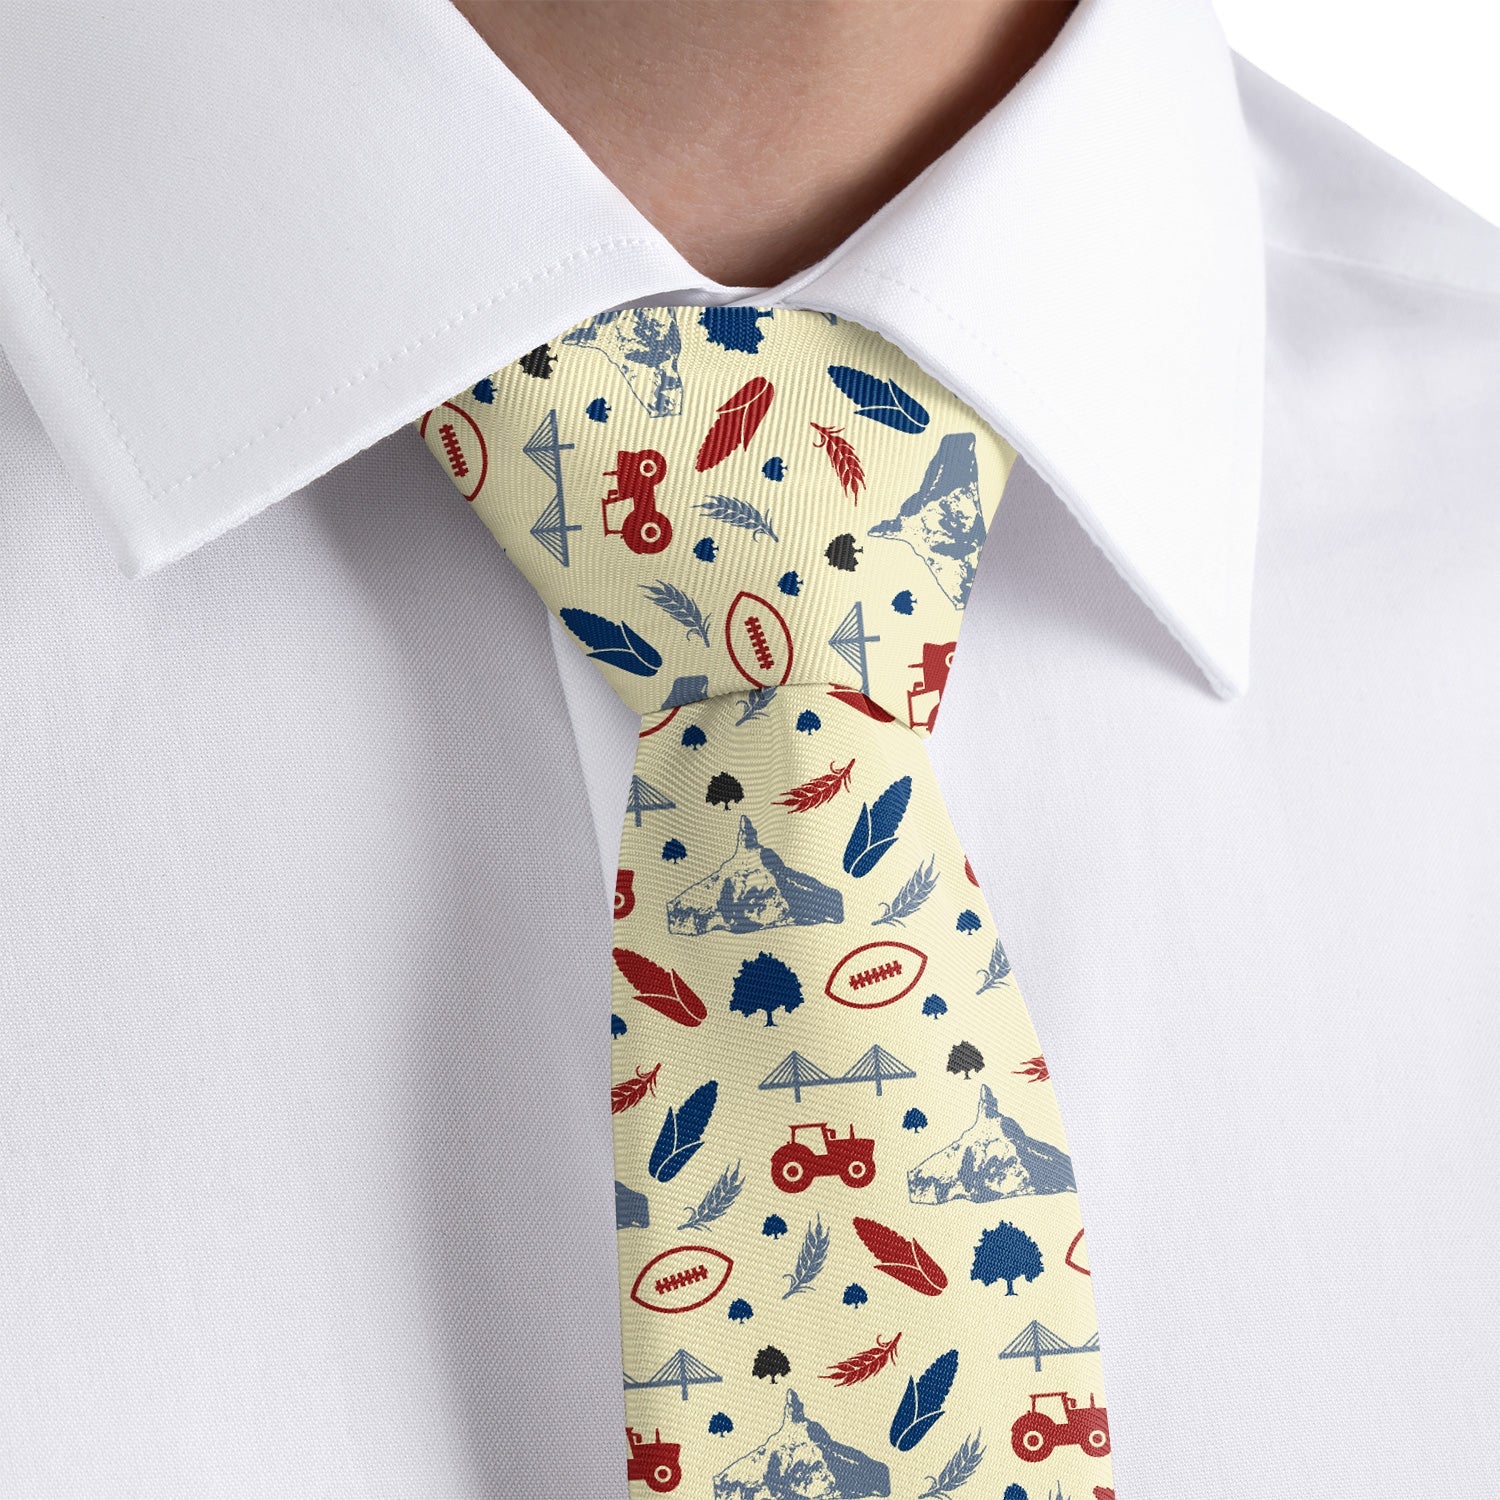 Nebraska State Heritage Necktie -  -  - Knotty Tie Co.